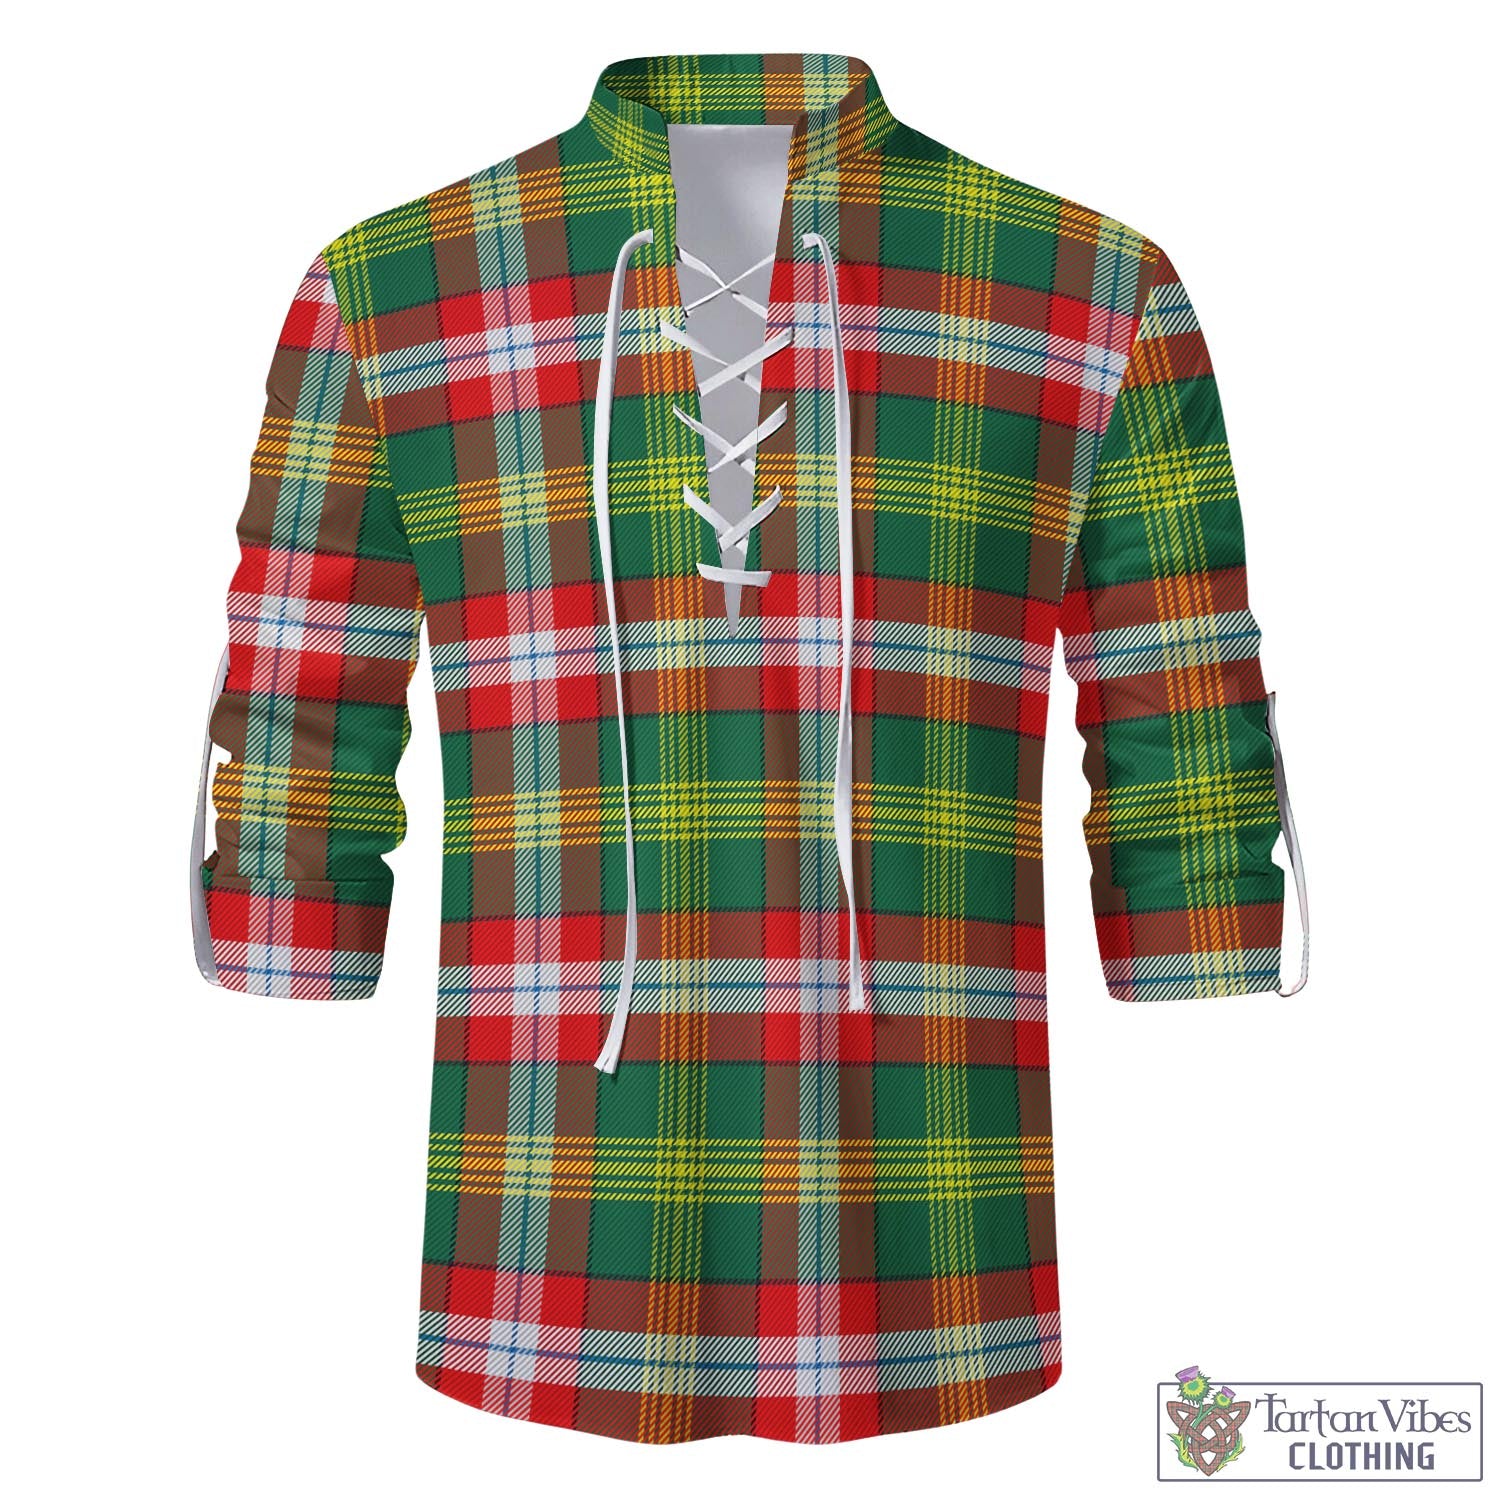 Tartan Vibes Clothing Northwest Territories Canada Tartan Men's Scottish Traditional Jacobite Ghillie Kilt Shirt